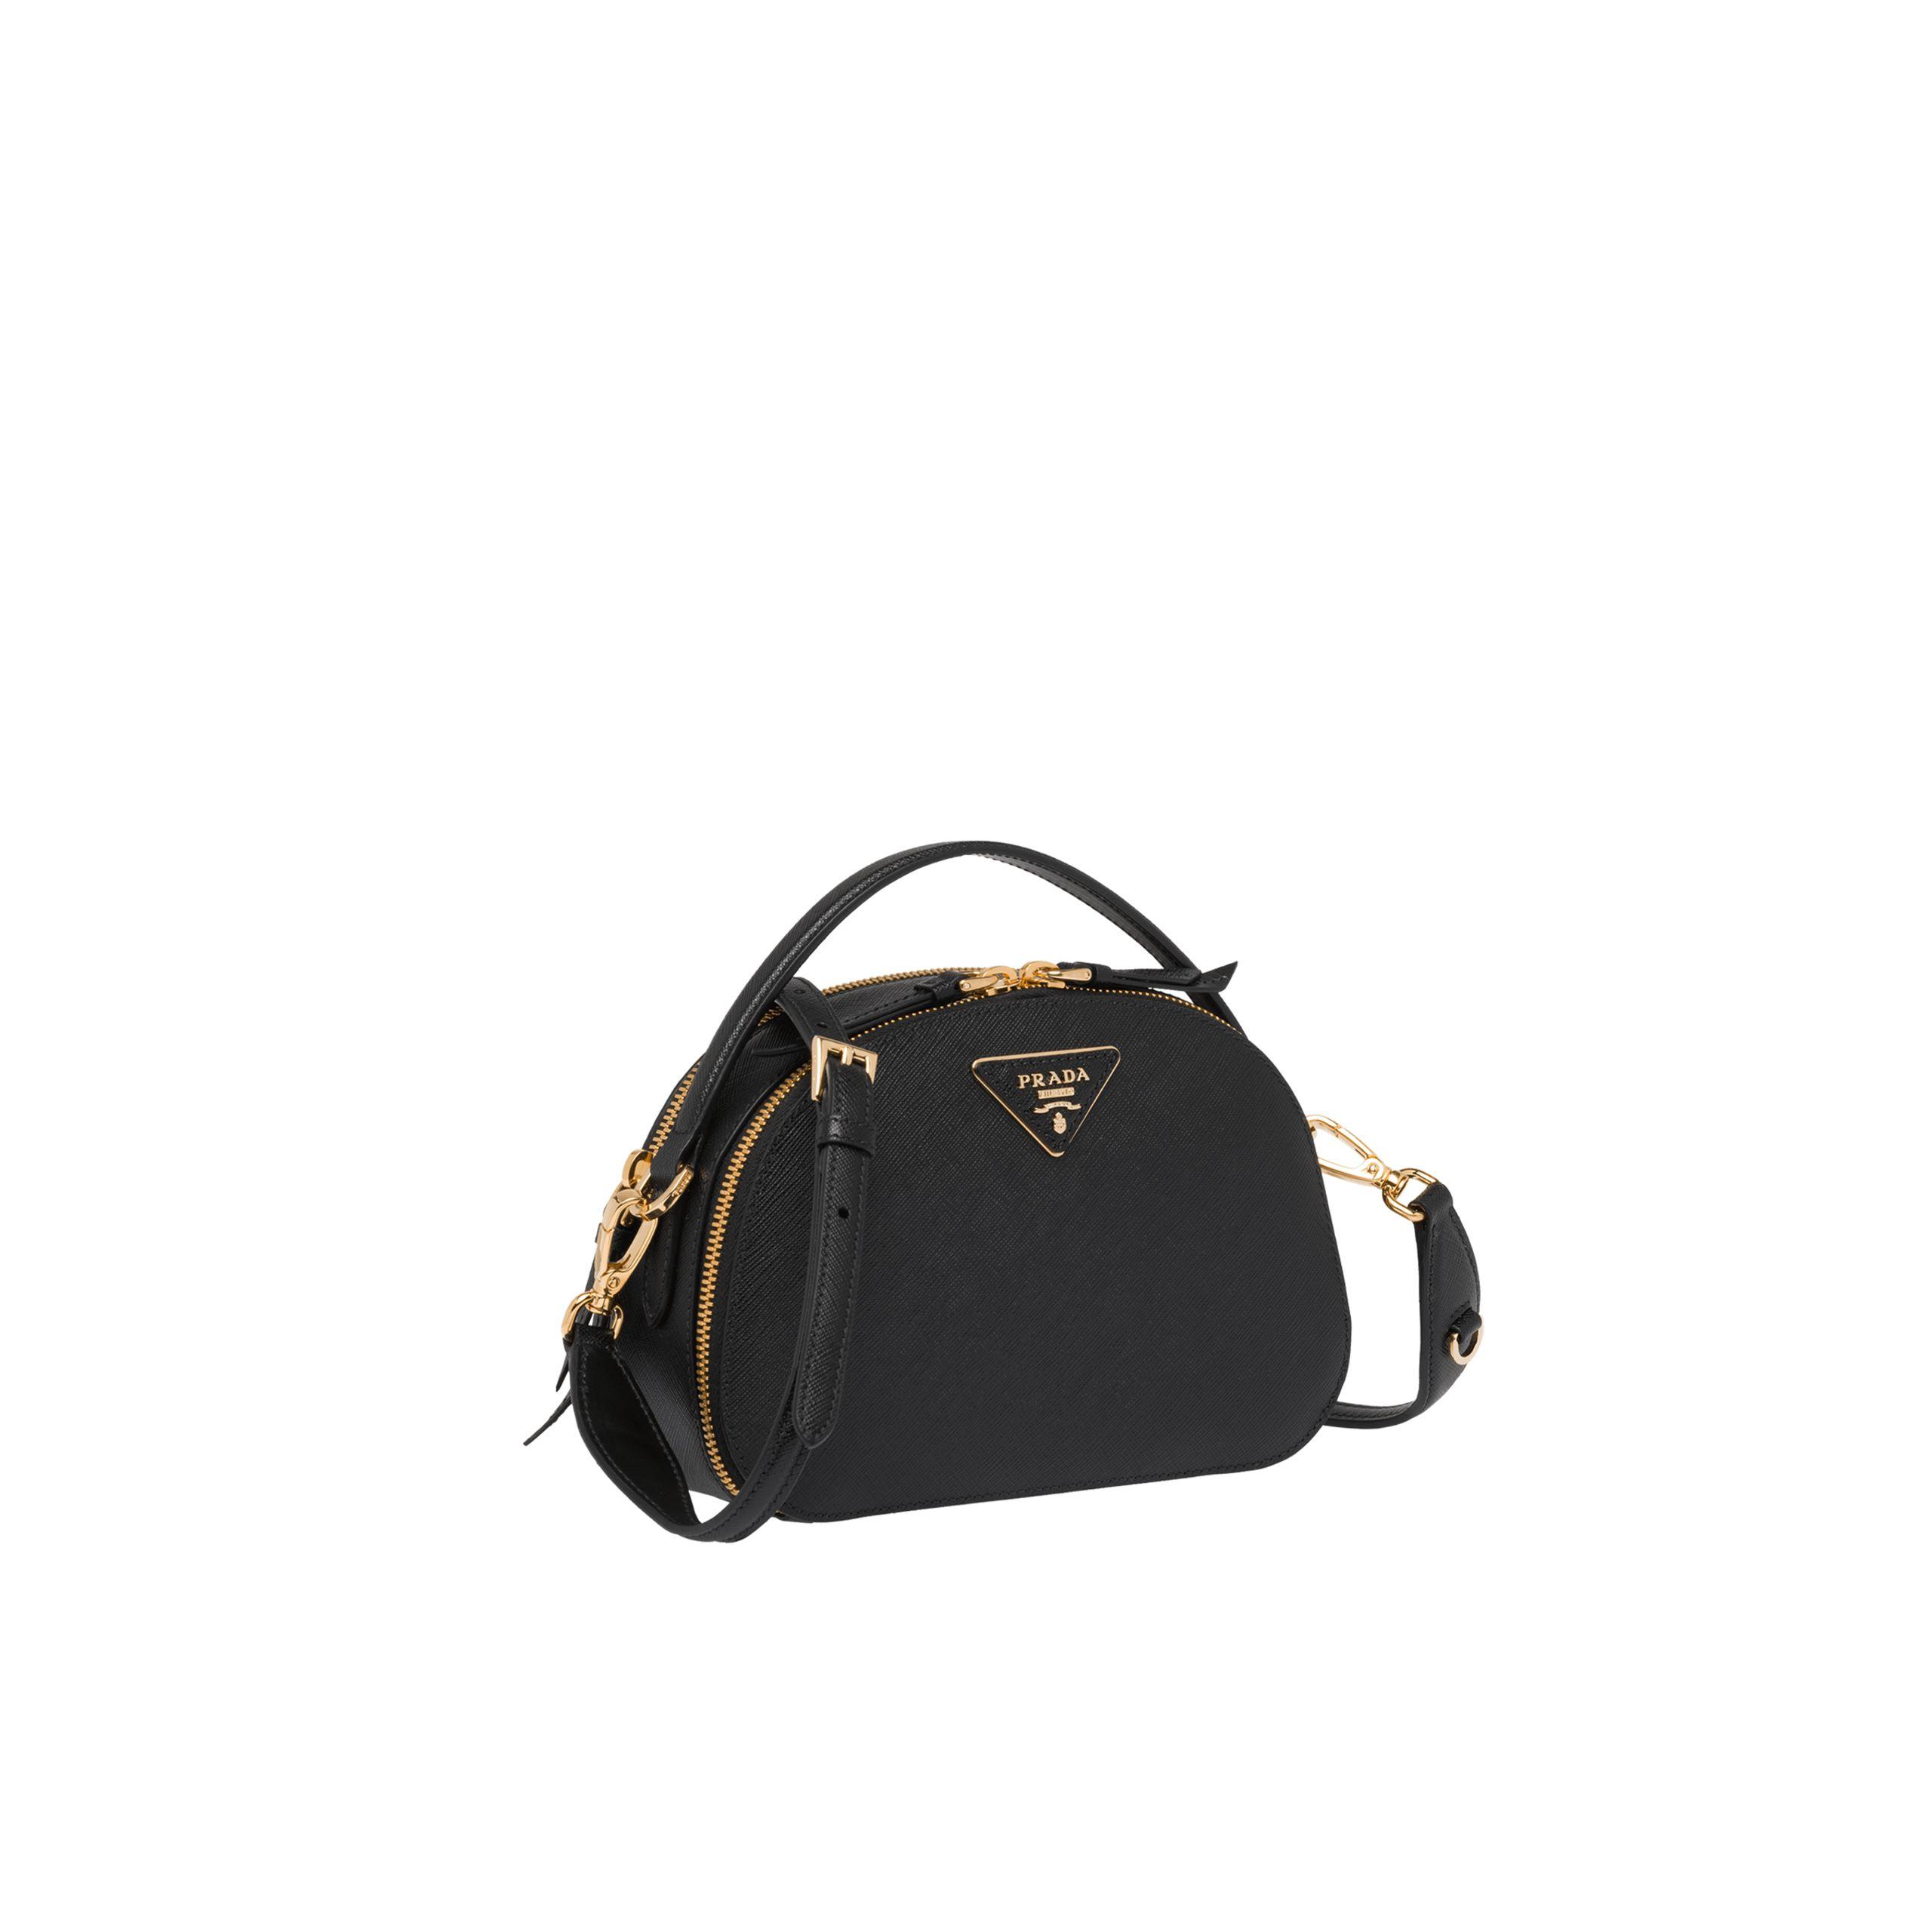 bezig convergentie ochtendgloren Prada Odette Leather Cross-body Bag in Black | Lyst